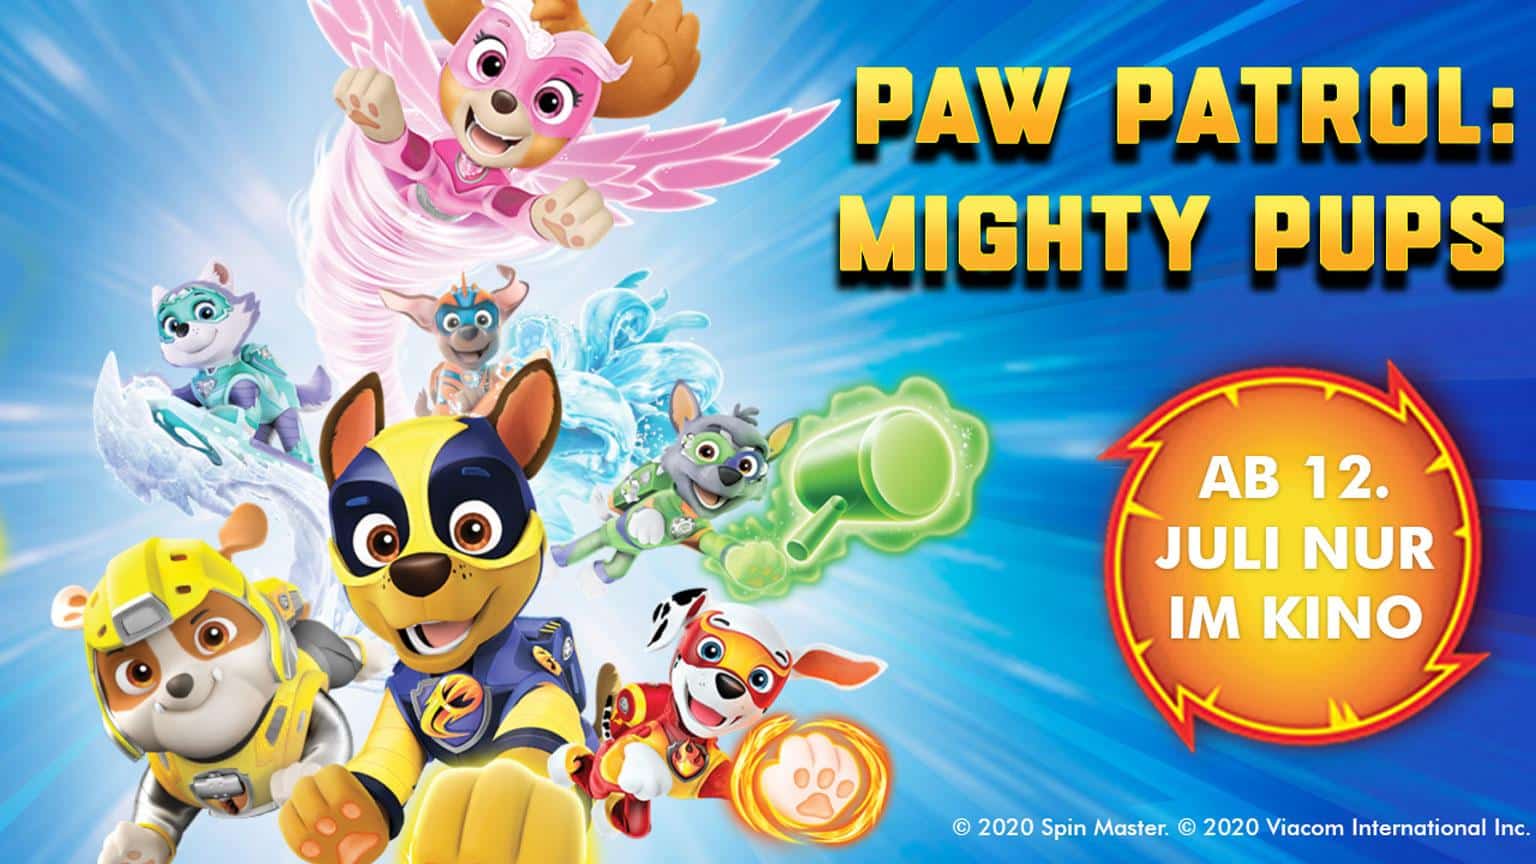 PAW PATROL MIGHTY PUPS Kino Film Trailer 2020